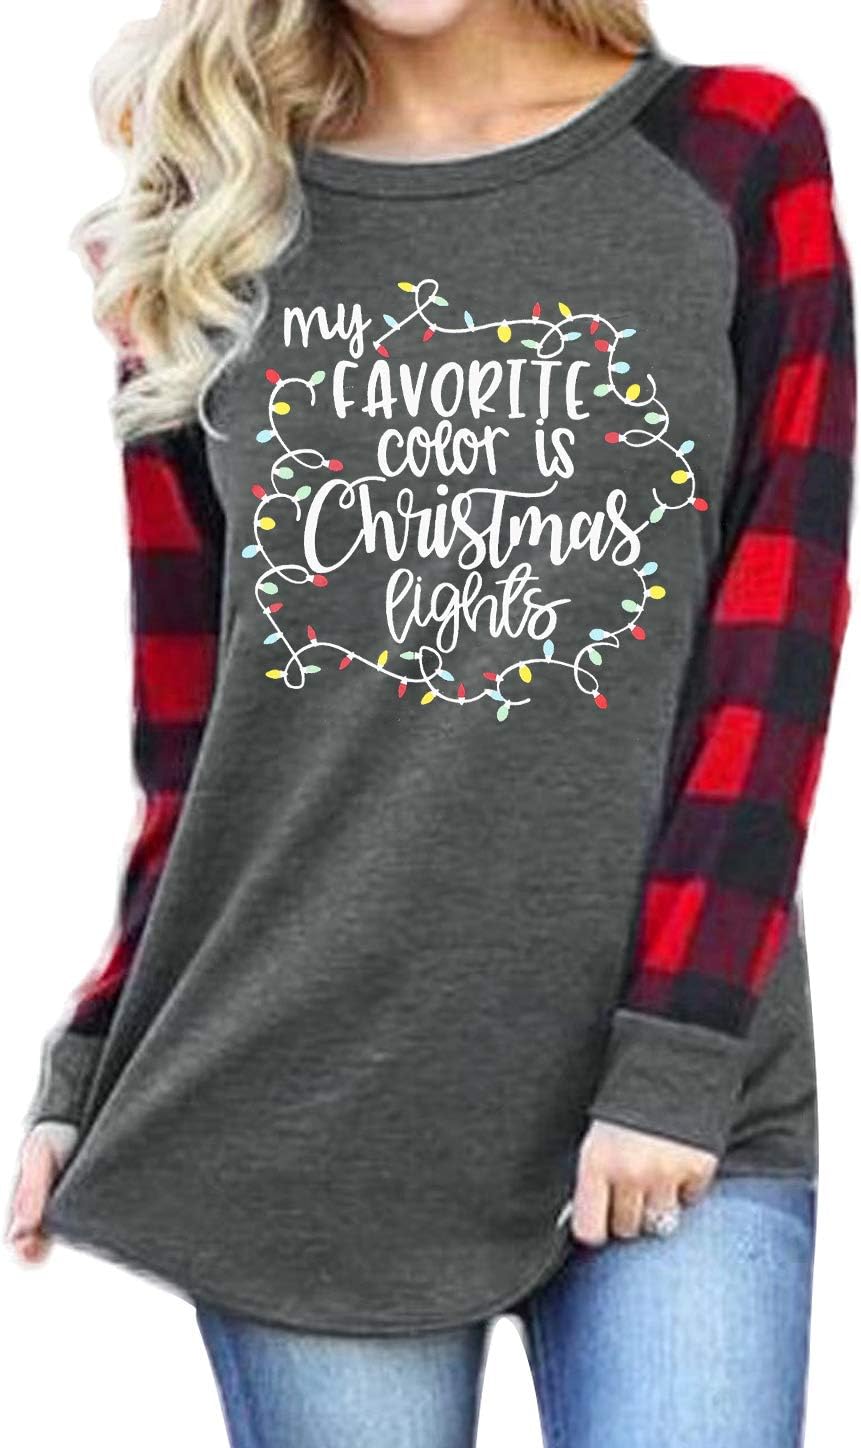 My Favorite Color is Christmas Lights T-Shirt Women Plaid Raglan Long Sleeve Holiday Casual Tops Tees Xmas Gift Blouse